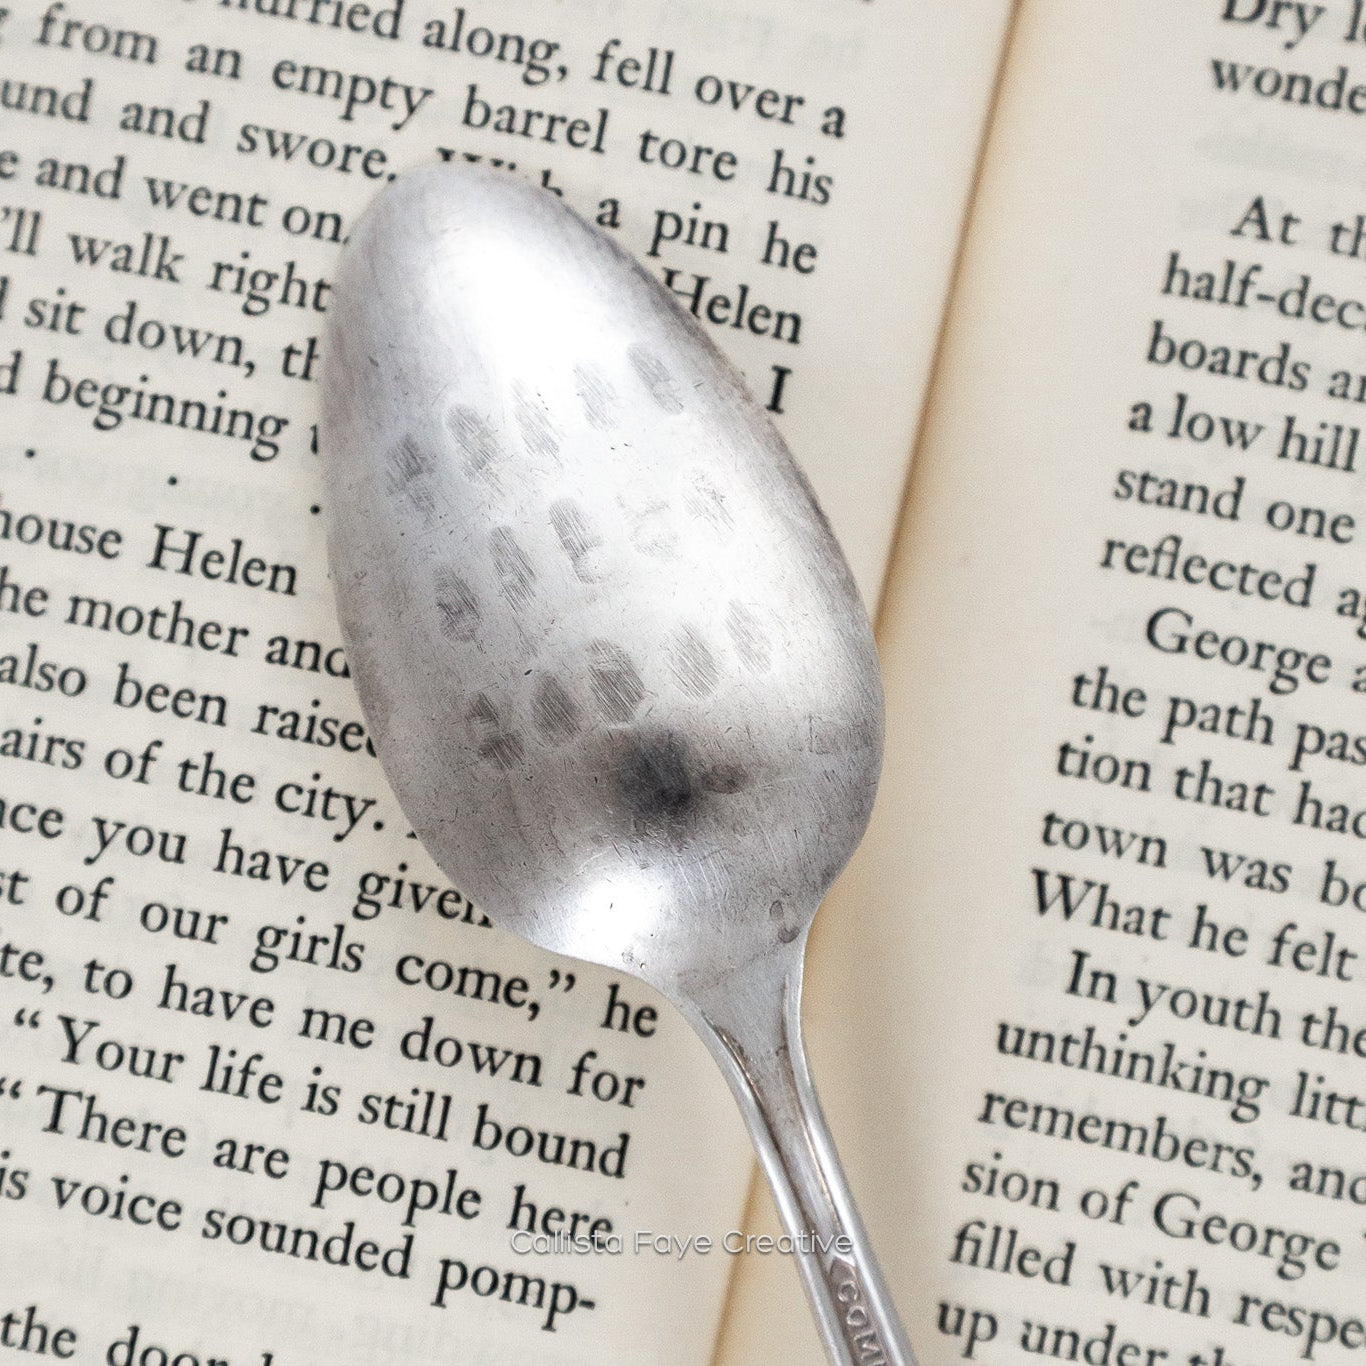 Ray of Fucking Sunshine, Hand Stamped Vintage Spoon Spoons callistafaye   